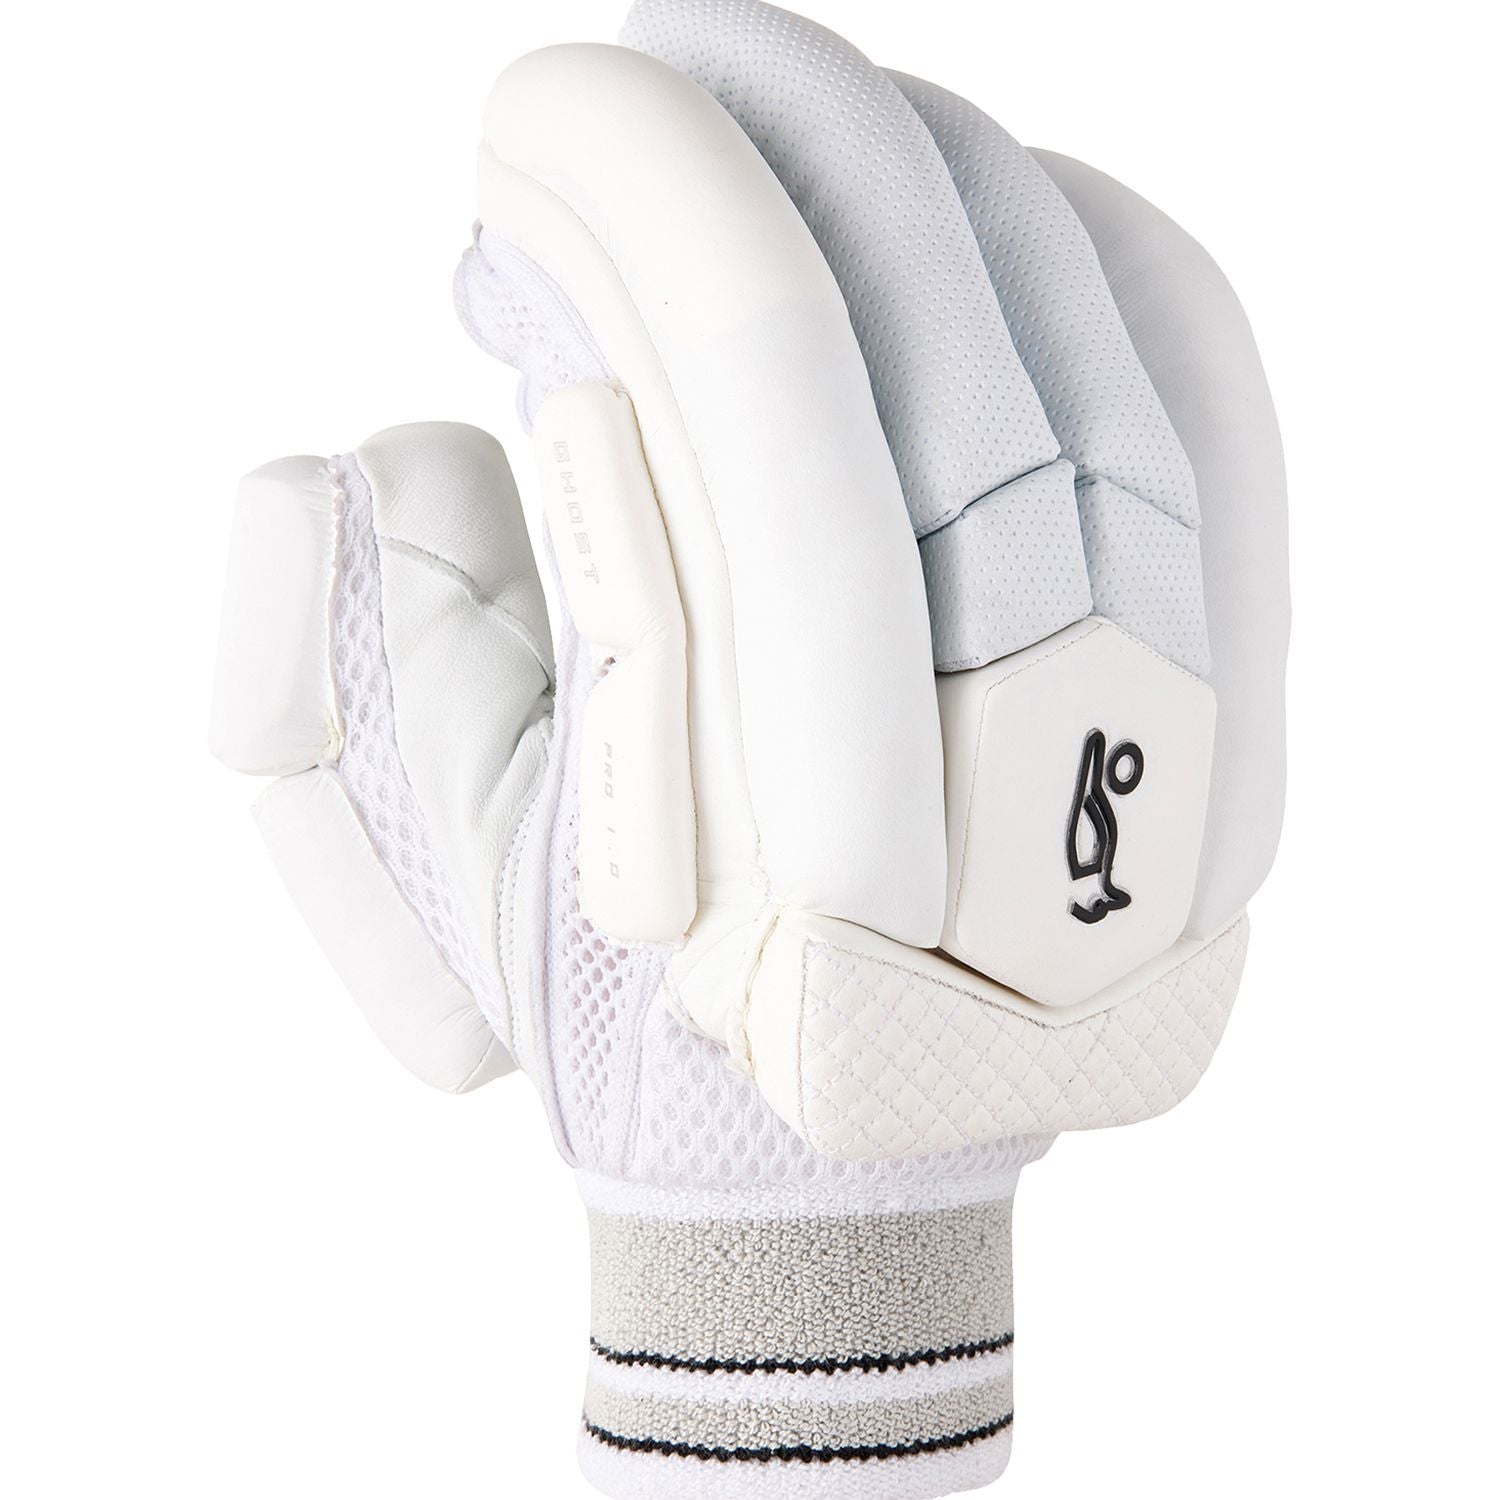 Kookaburra Ghost Pro 1.0 Cricket Batting Gloves